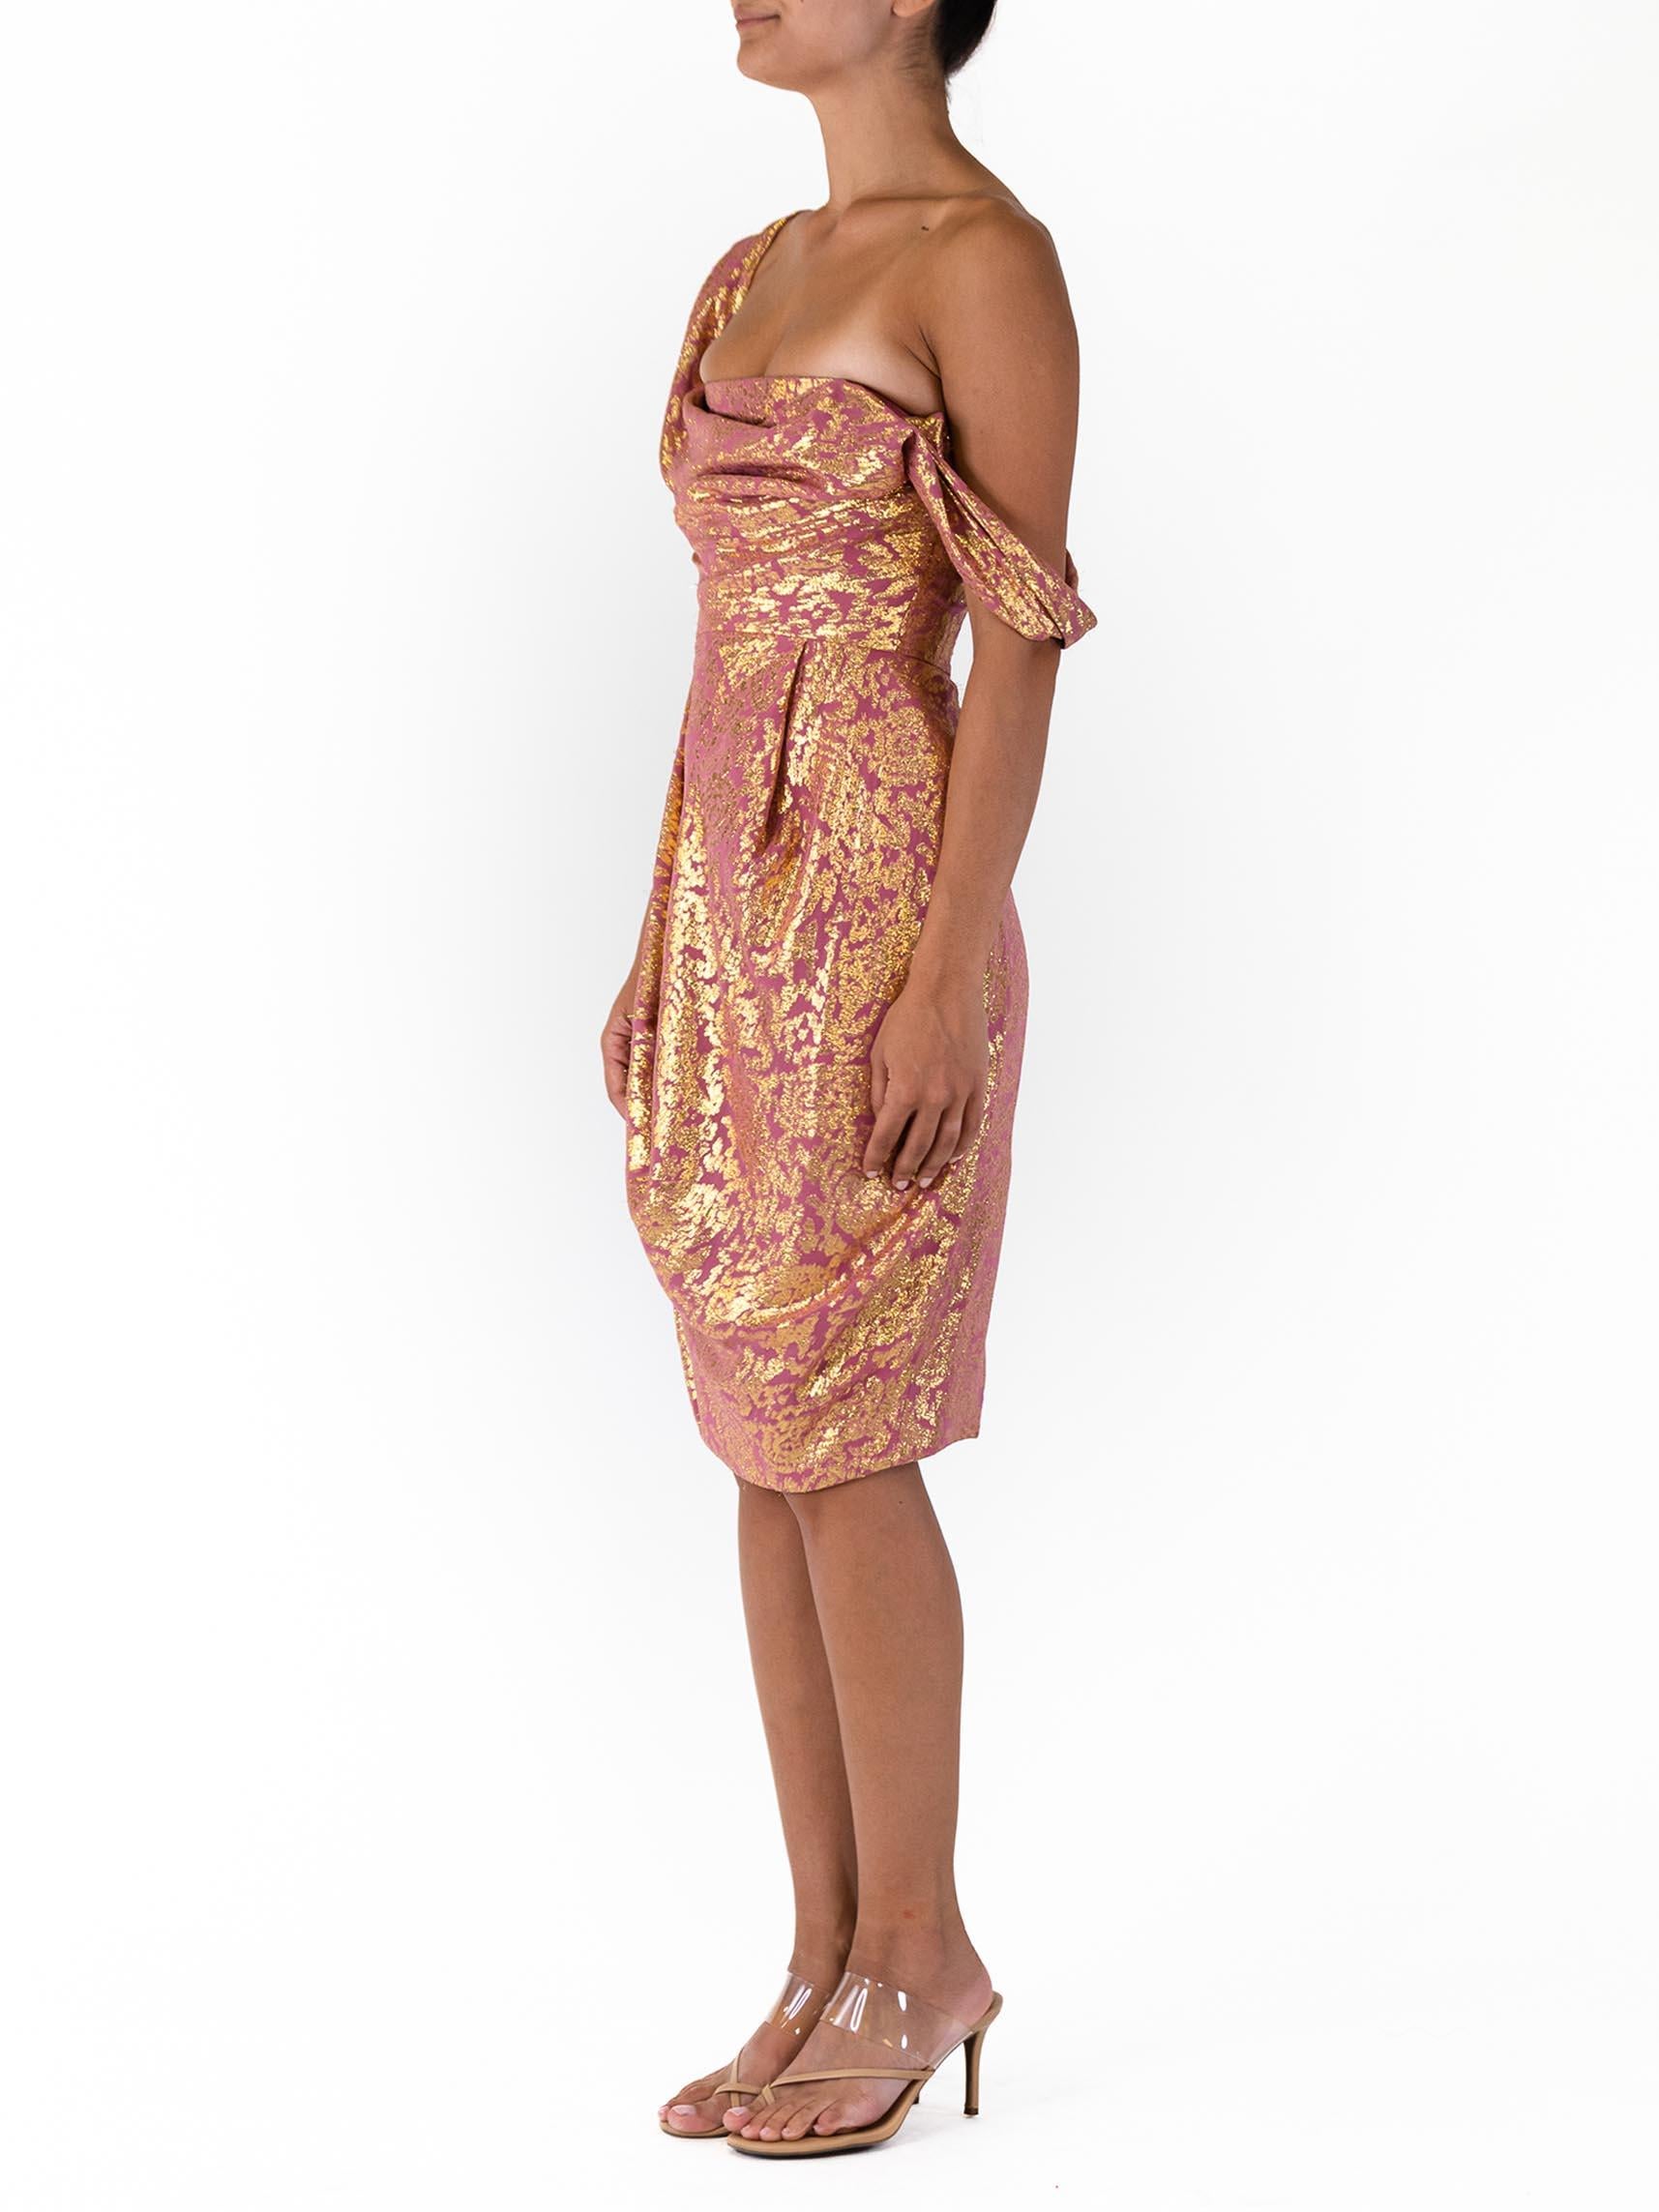 Brown 2000S VIVIENNE WESTWOOD Pink & Gold Silk Lurex Lamé Corseted Cocktail Dress For Sale